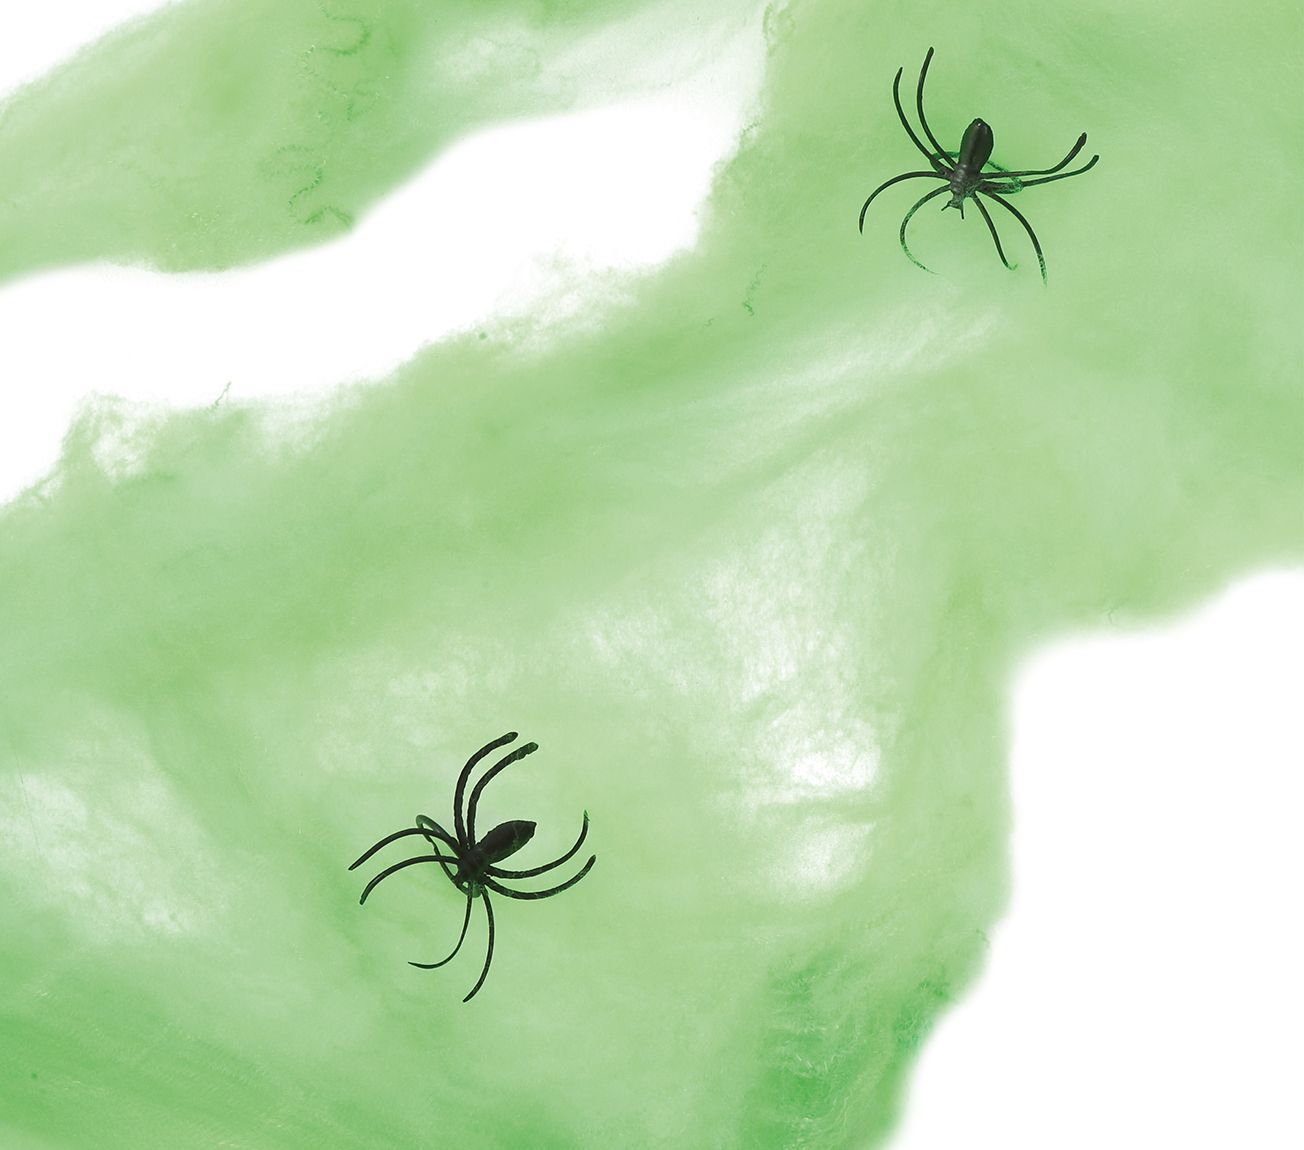 Groen spinnenweb met 4 spinnen